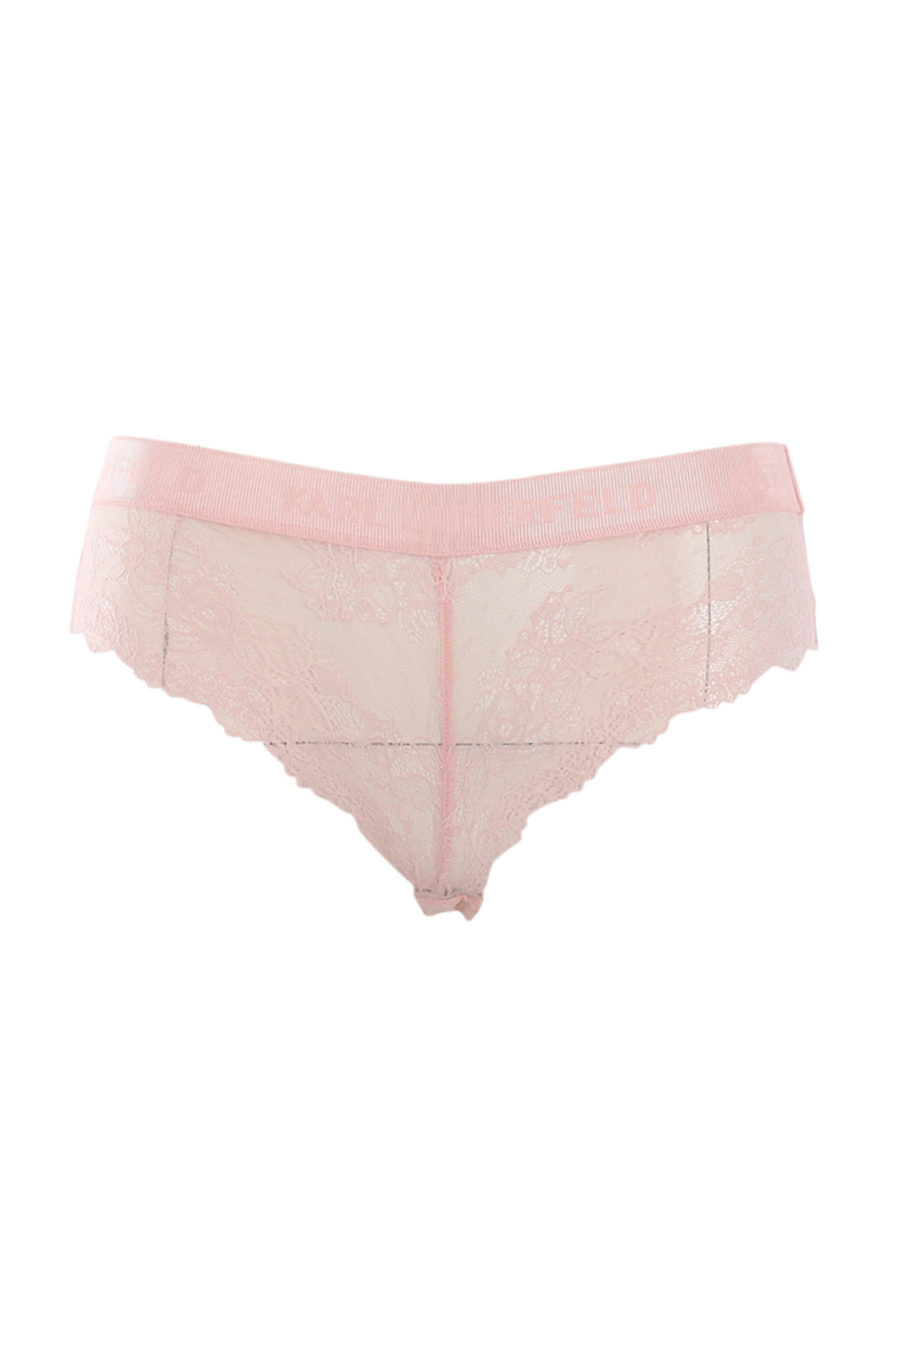 Pink panties in lace - IMG 0597